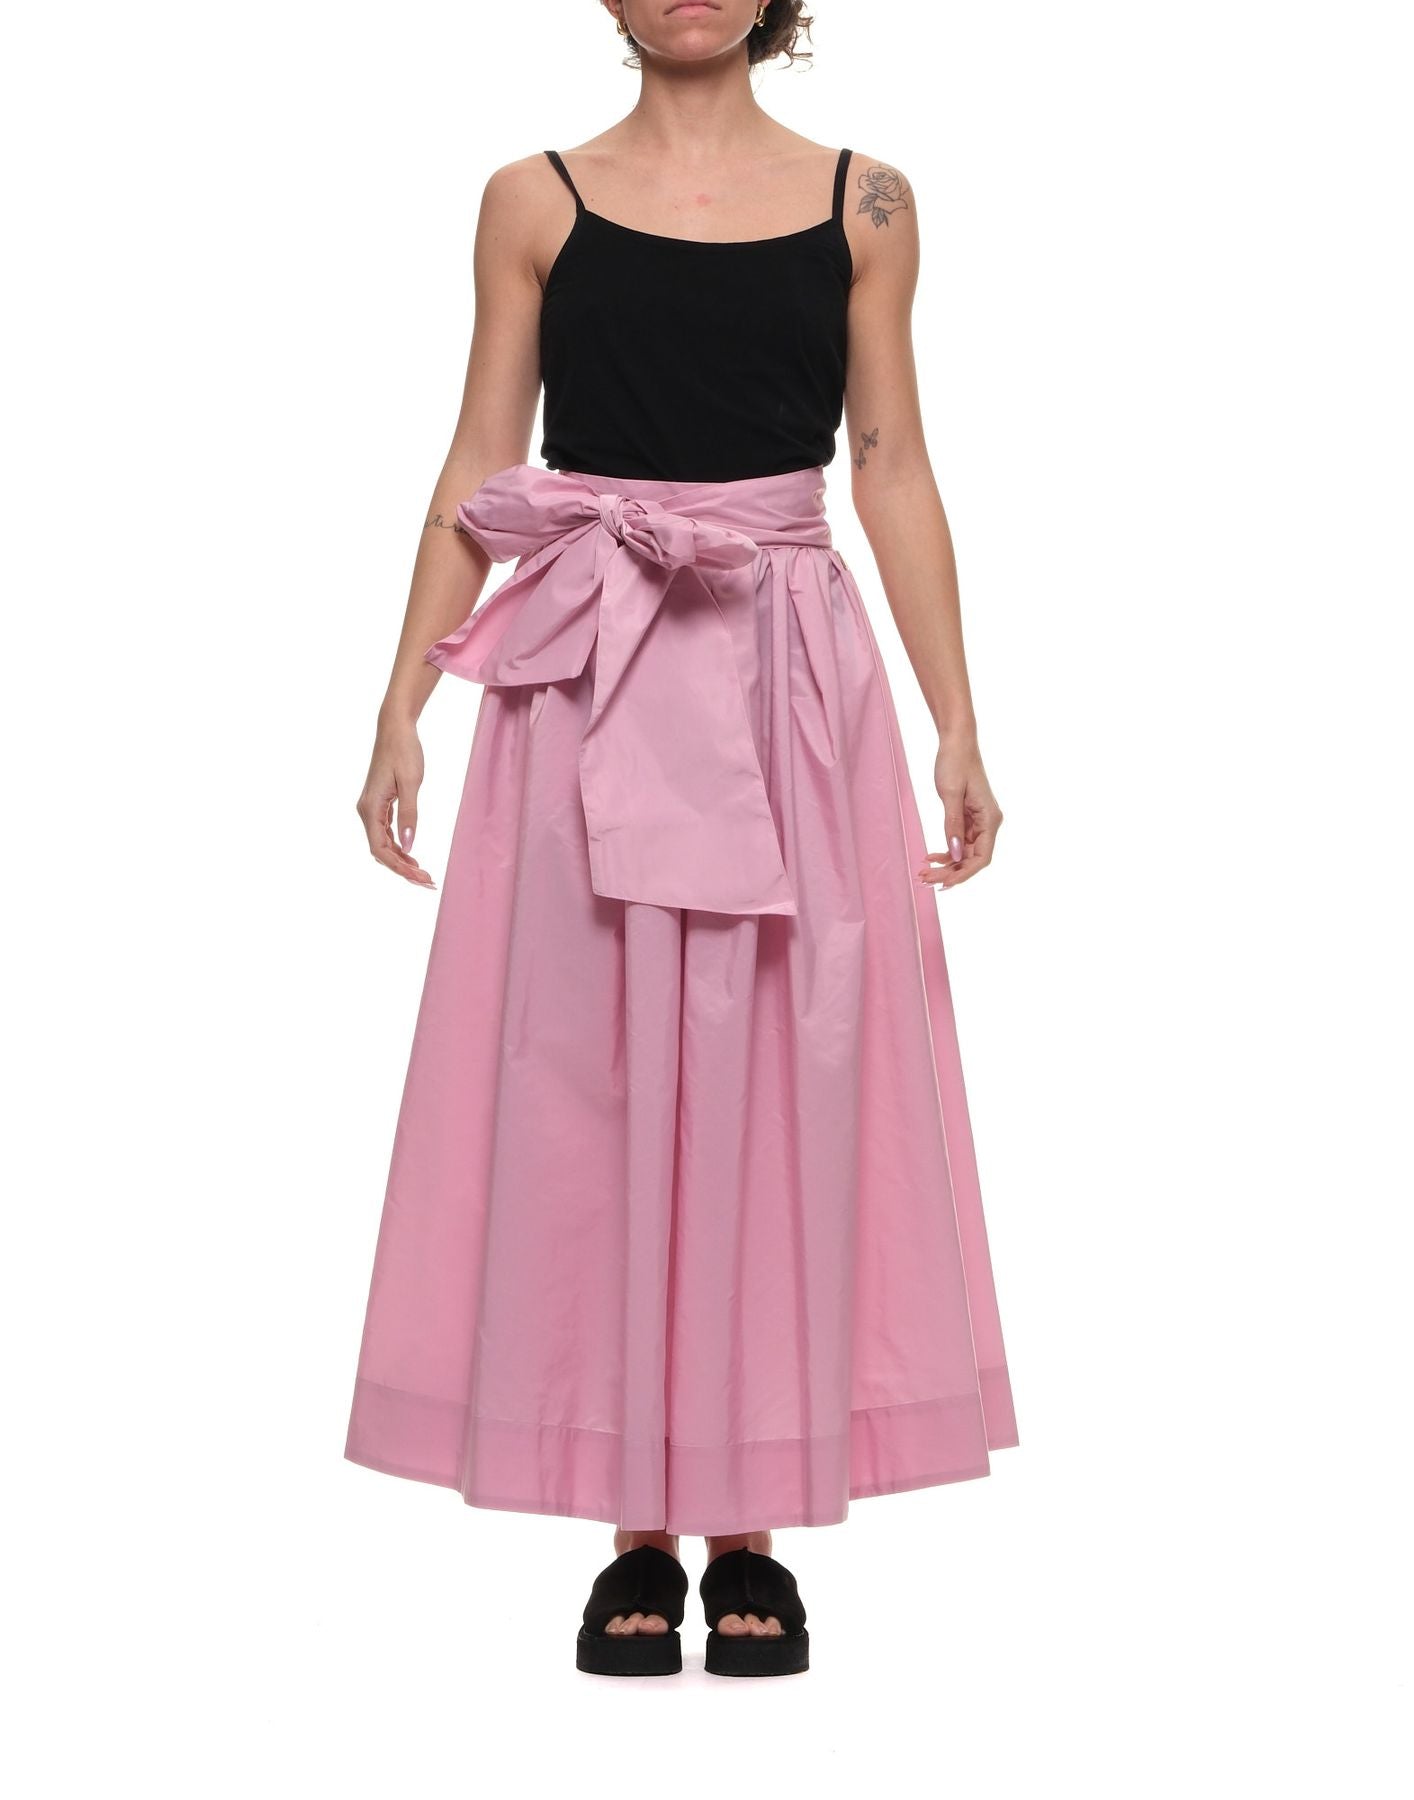 Skirt Woman Gokd05146 Rosa Akep